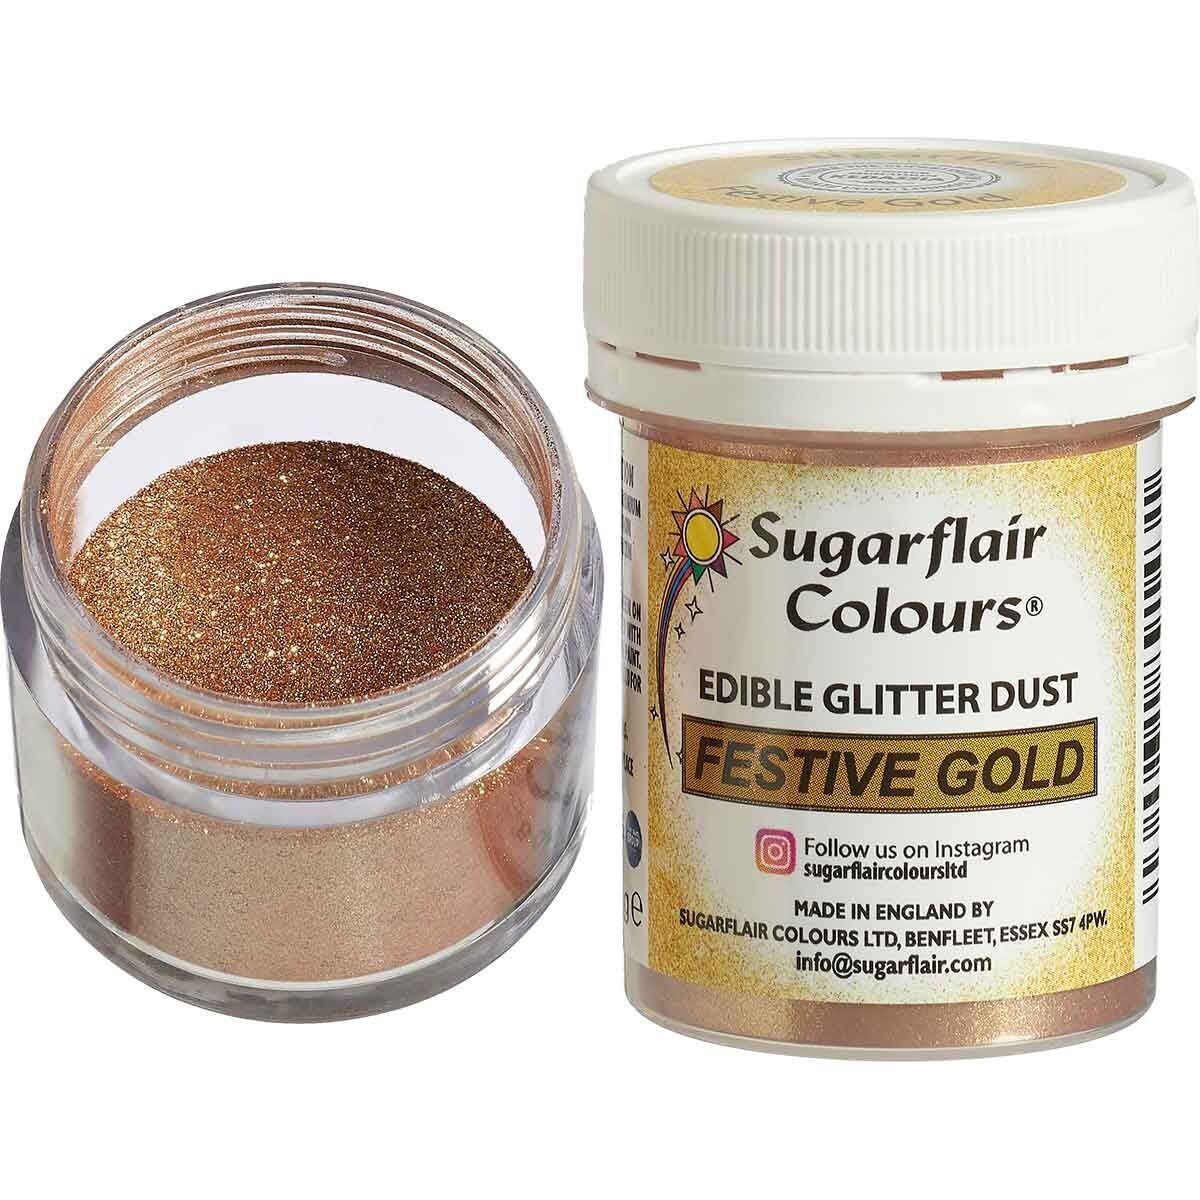 Sugarflair Edible GLITTER -FESTIVE GOLD - Βρώσιμη Σκόνη Γκλίτερ Μεταλλική Χρυσή 10γρ